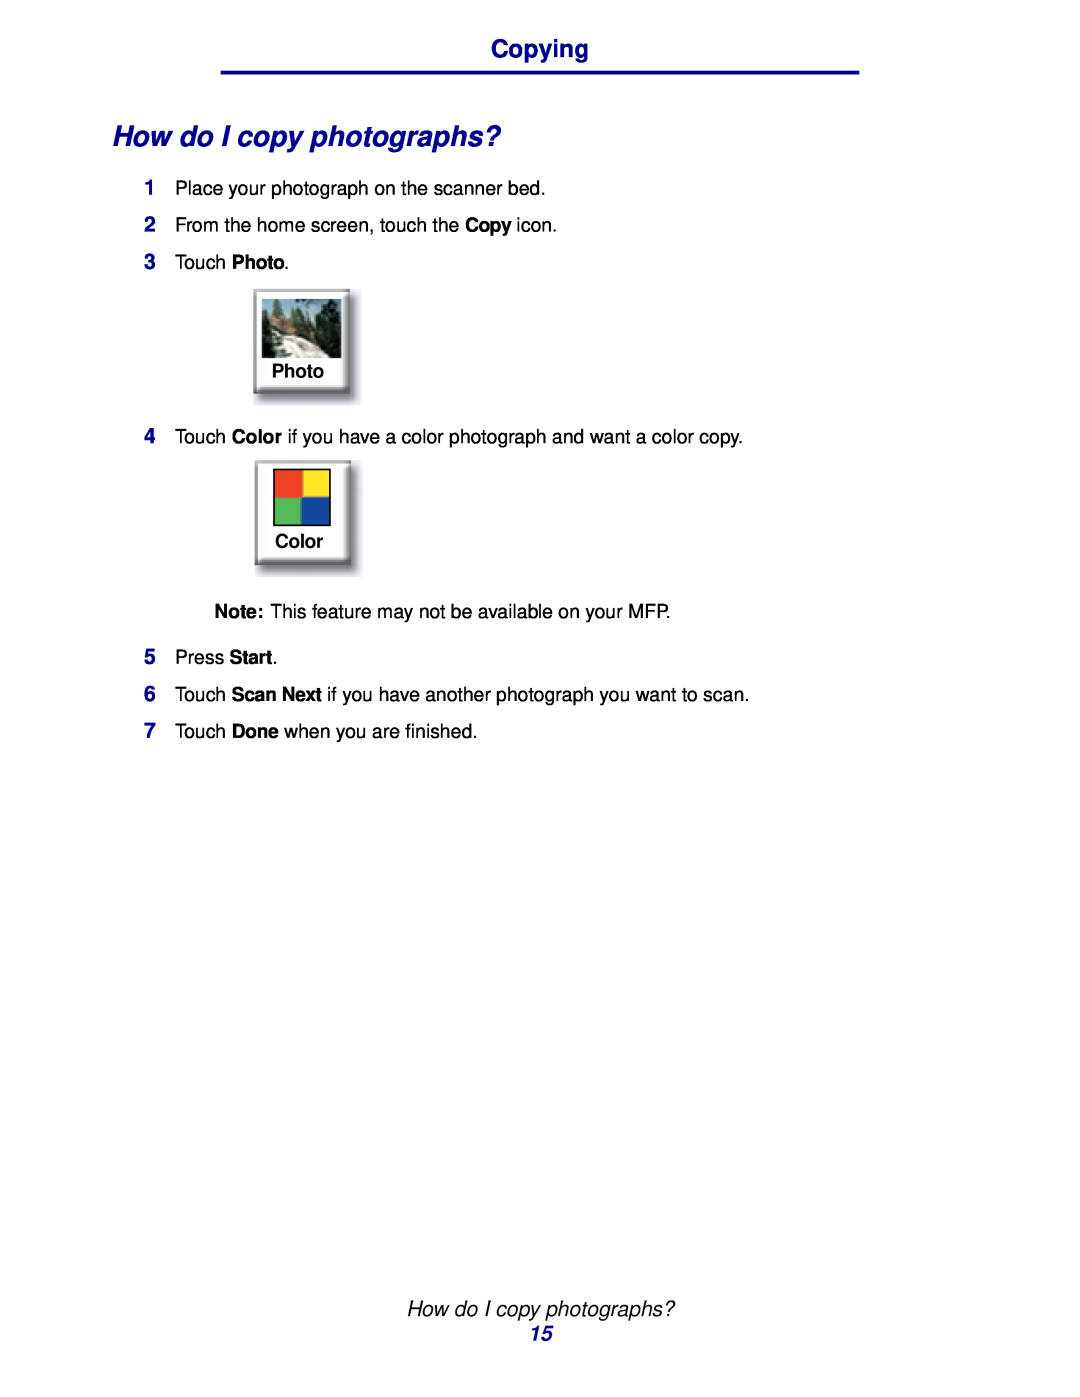 IBM MFP 30, MFP 35 manual How do I copy photographs?, Photo, Copying, Color 